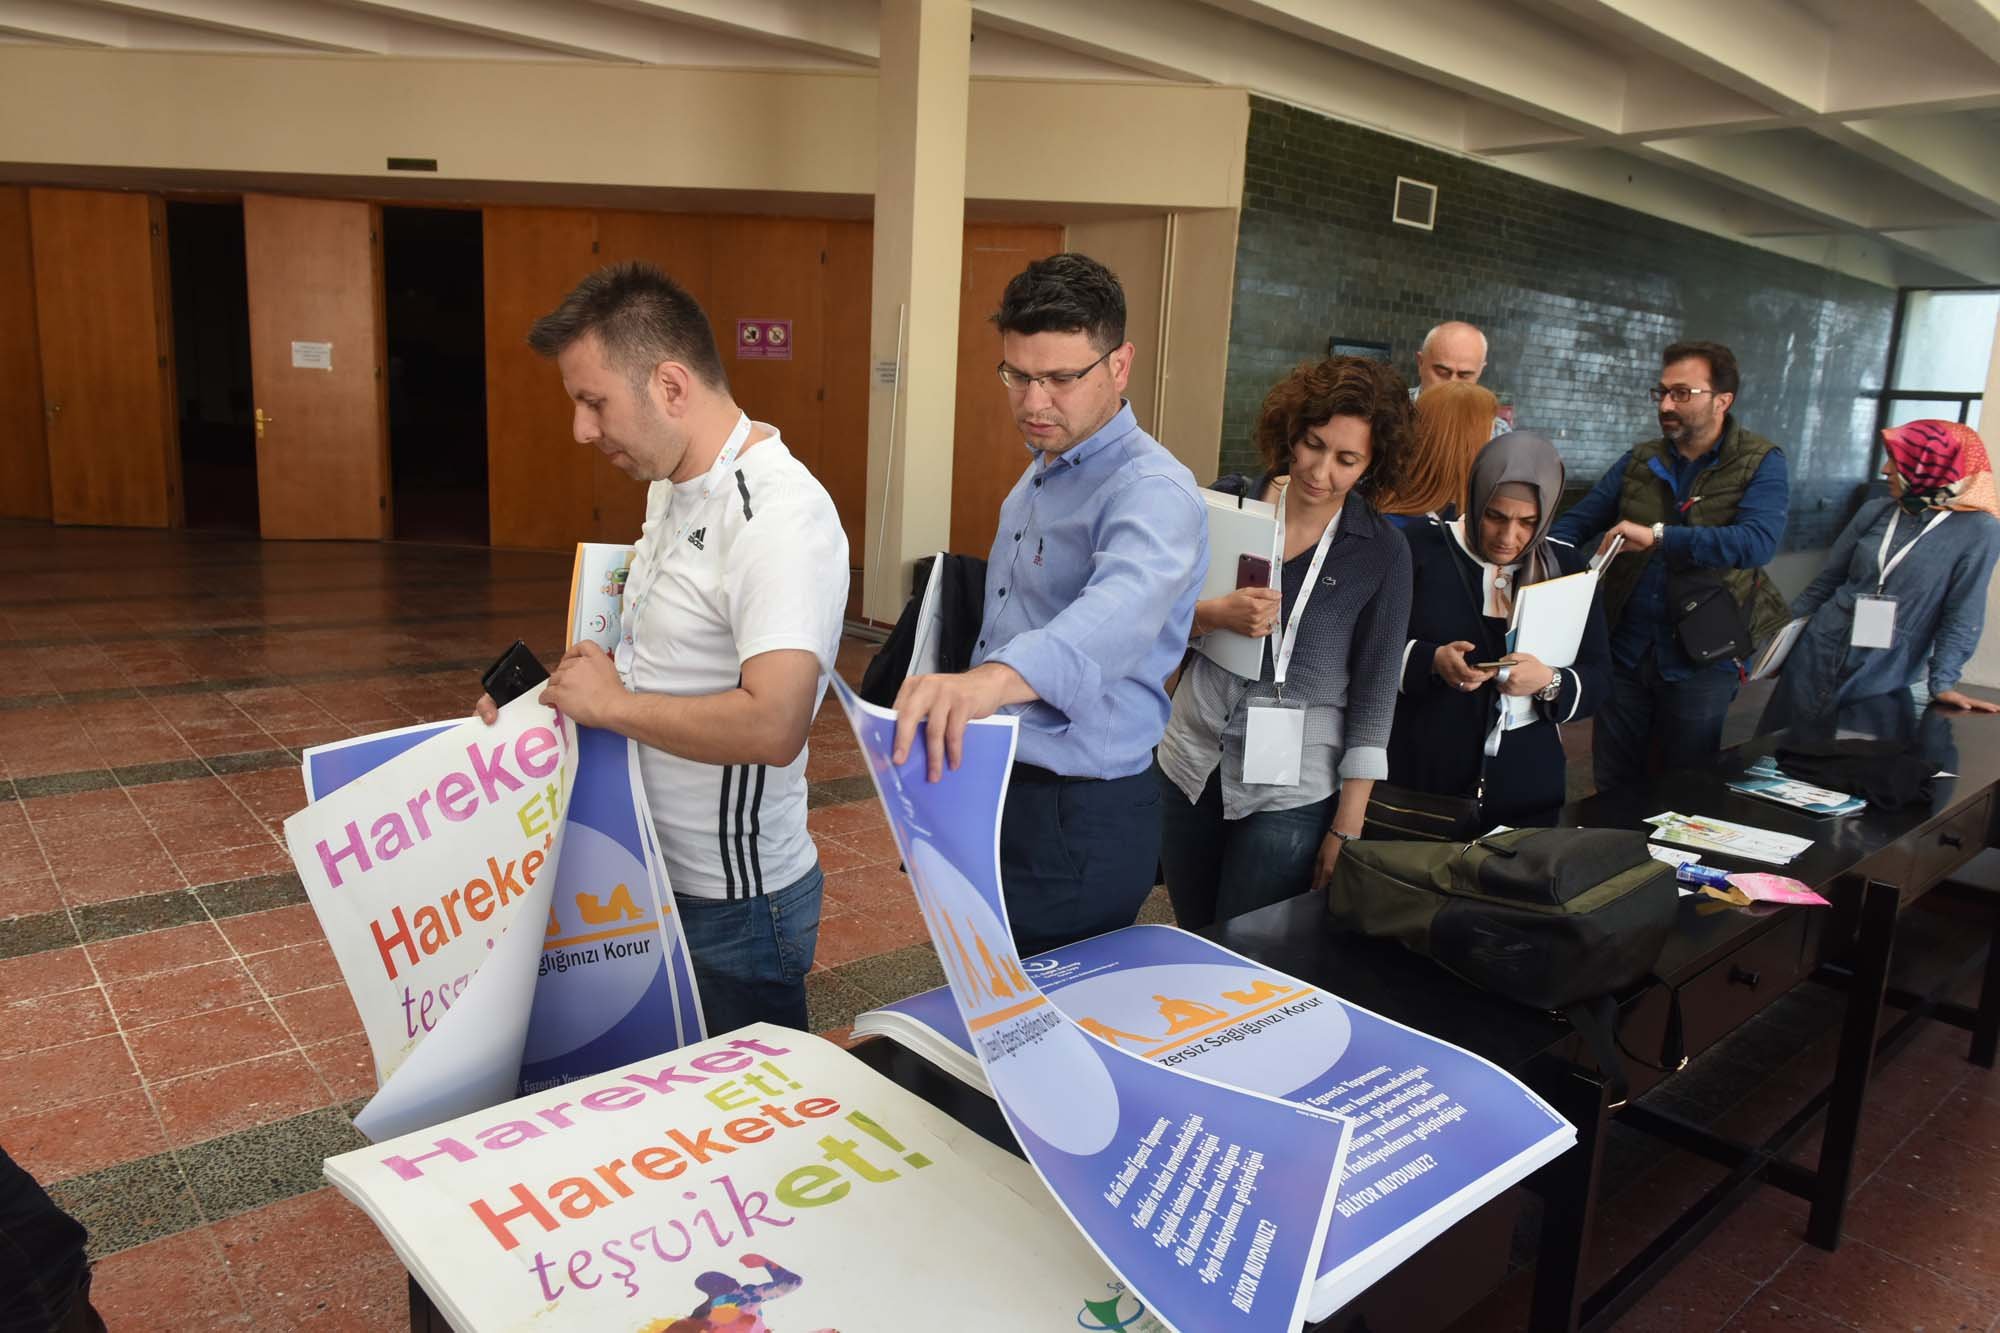 Trabzon Fiziksel Aktivite Liderlik Programı